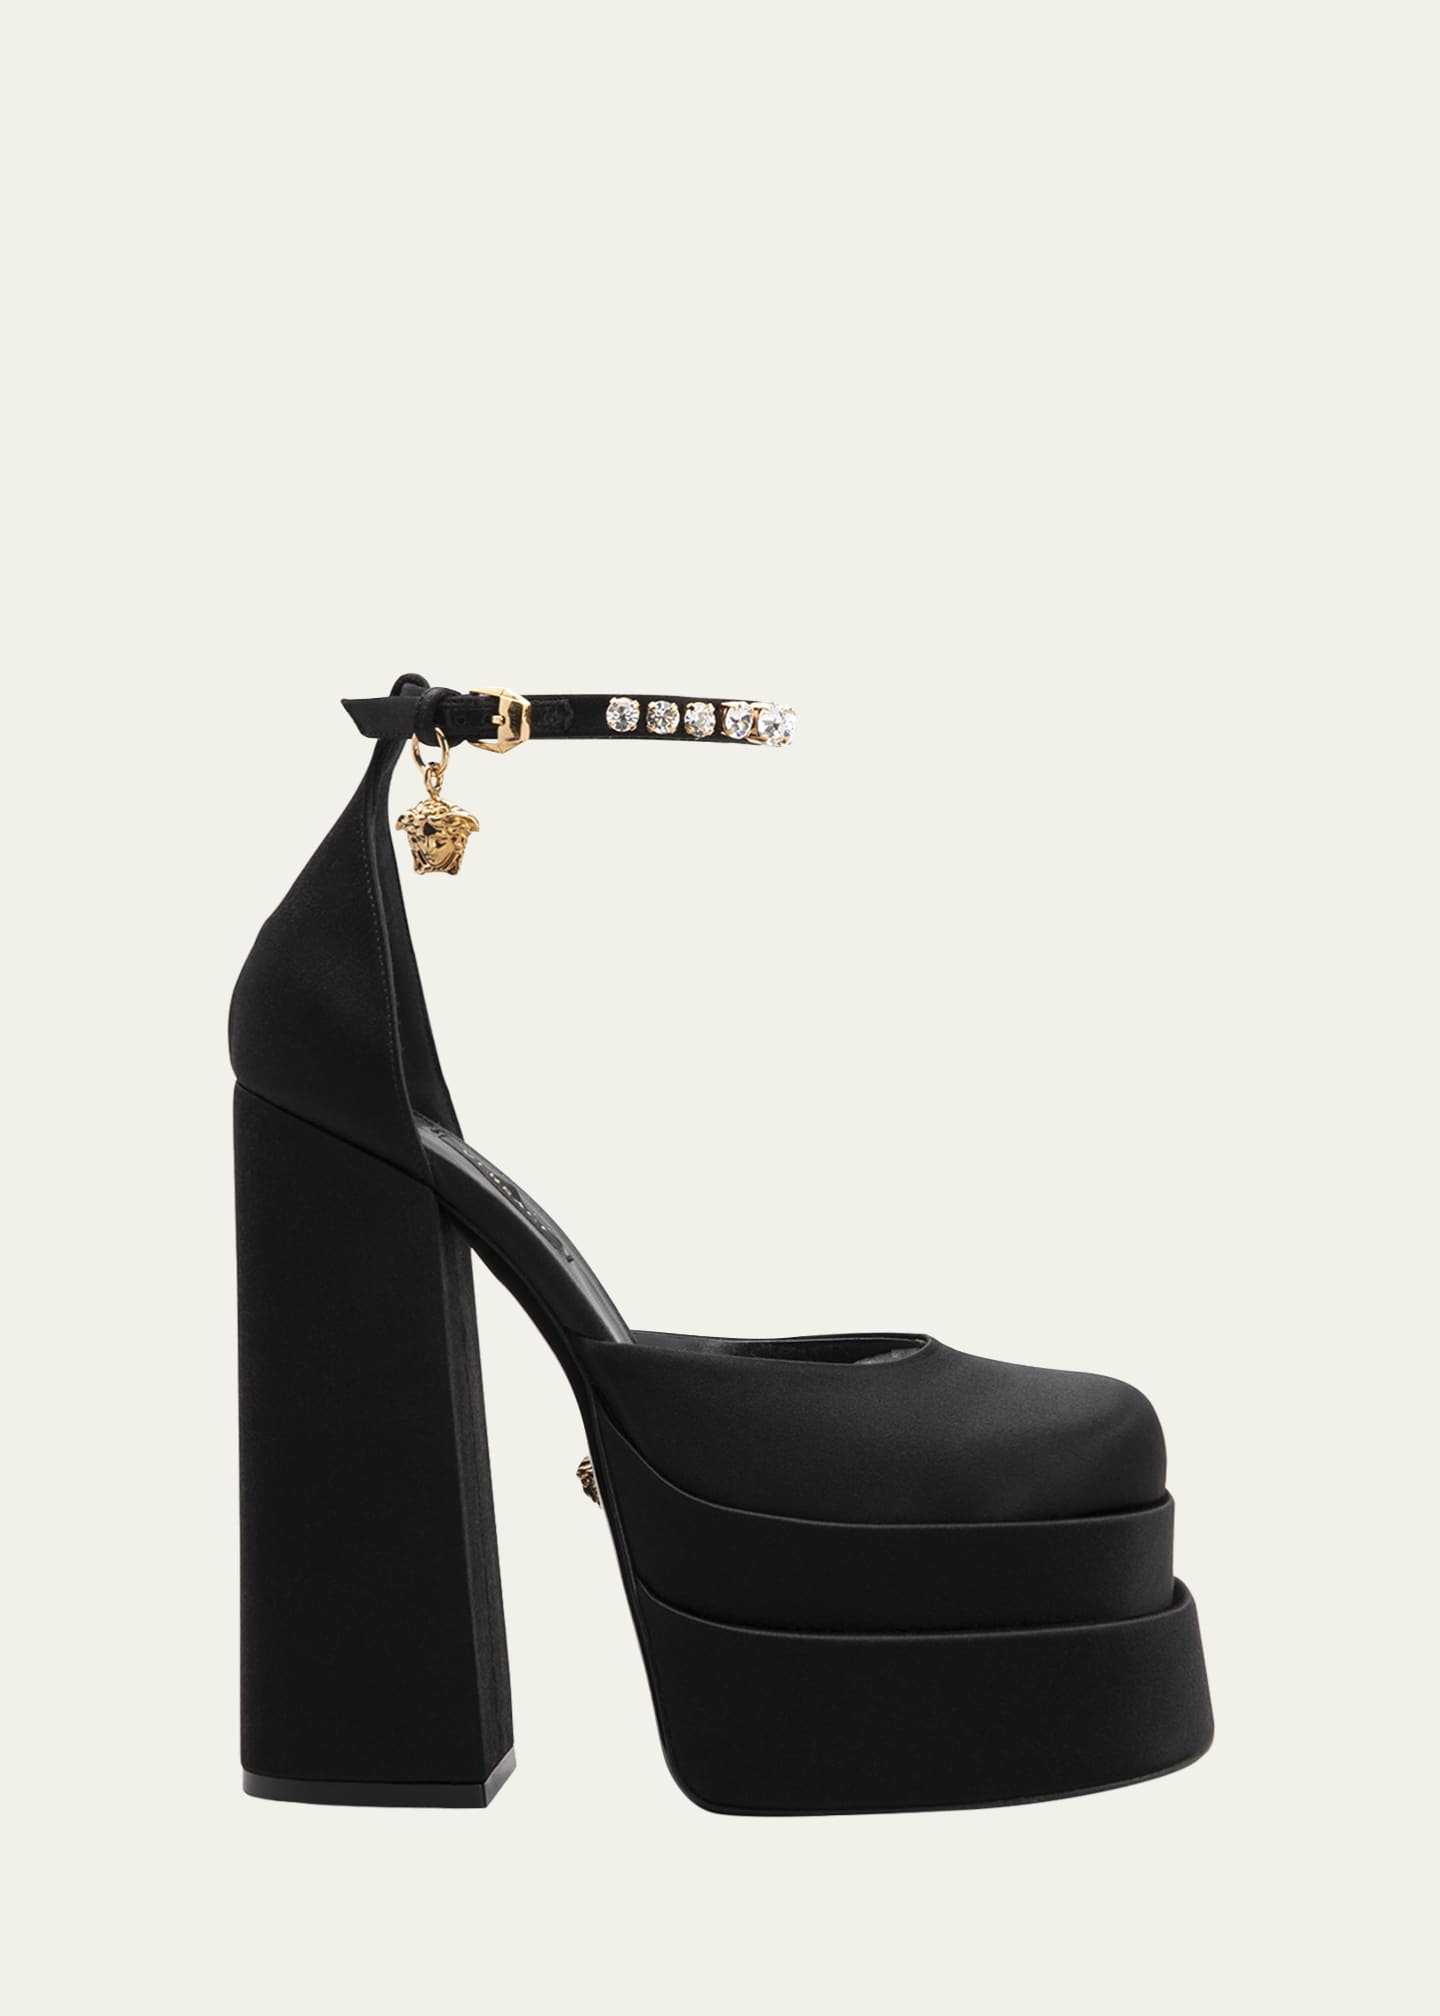 Versace 155mm La Medusa Platform Satin Mary Janes - Bergdorf Goodman